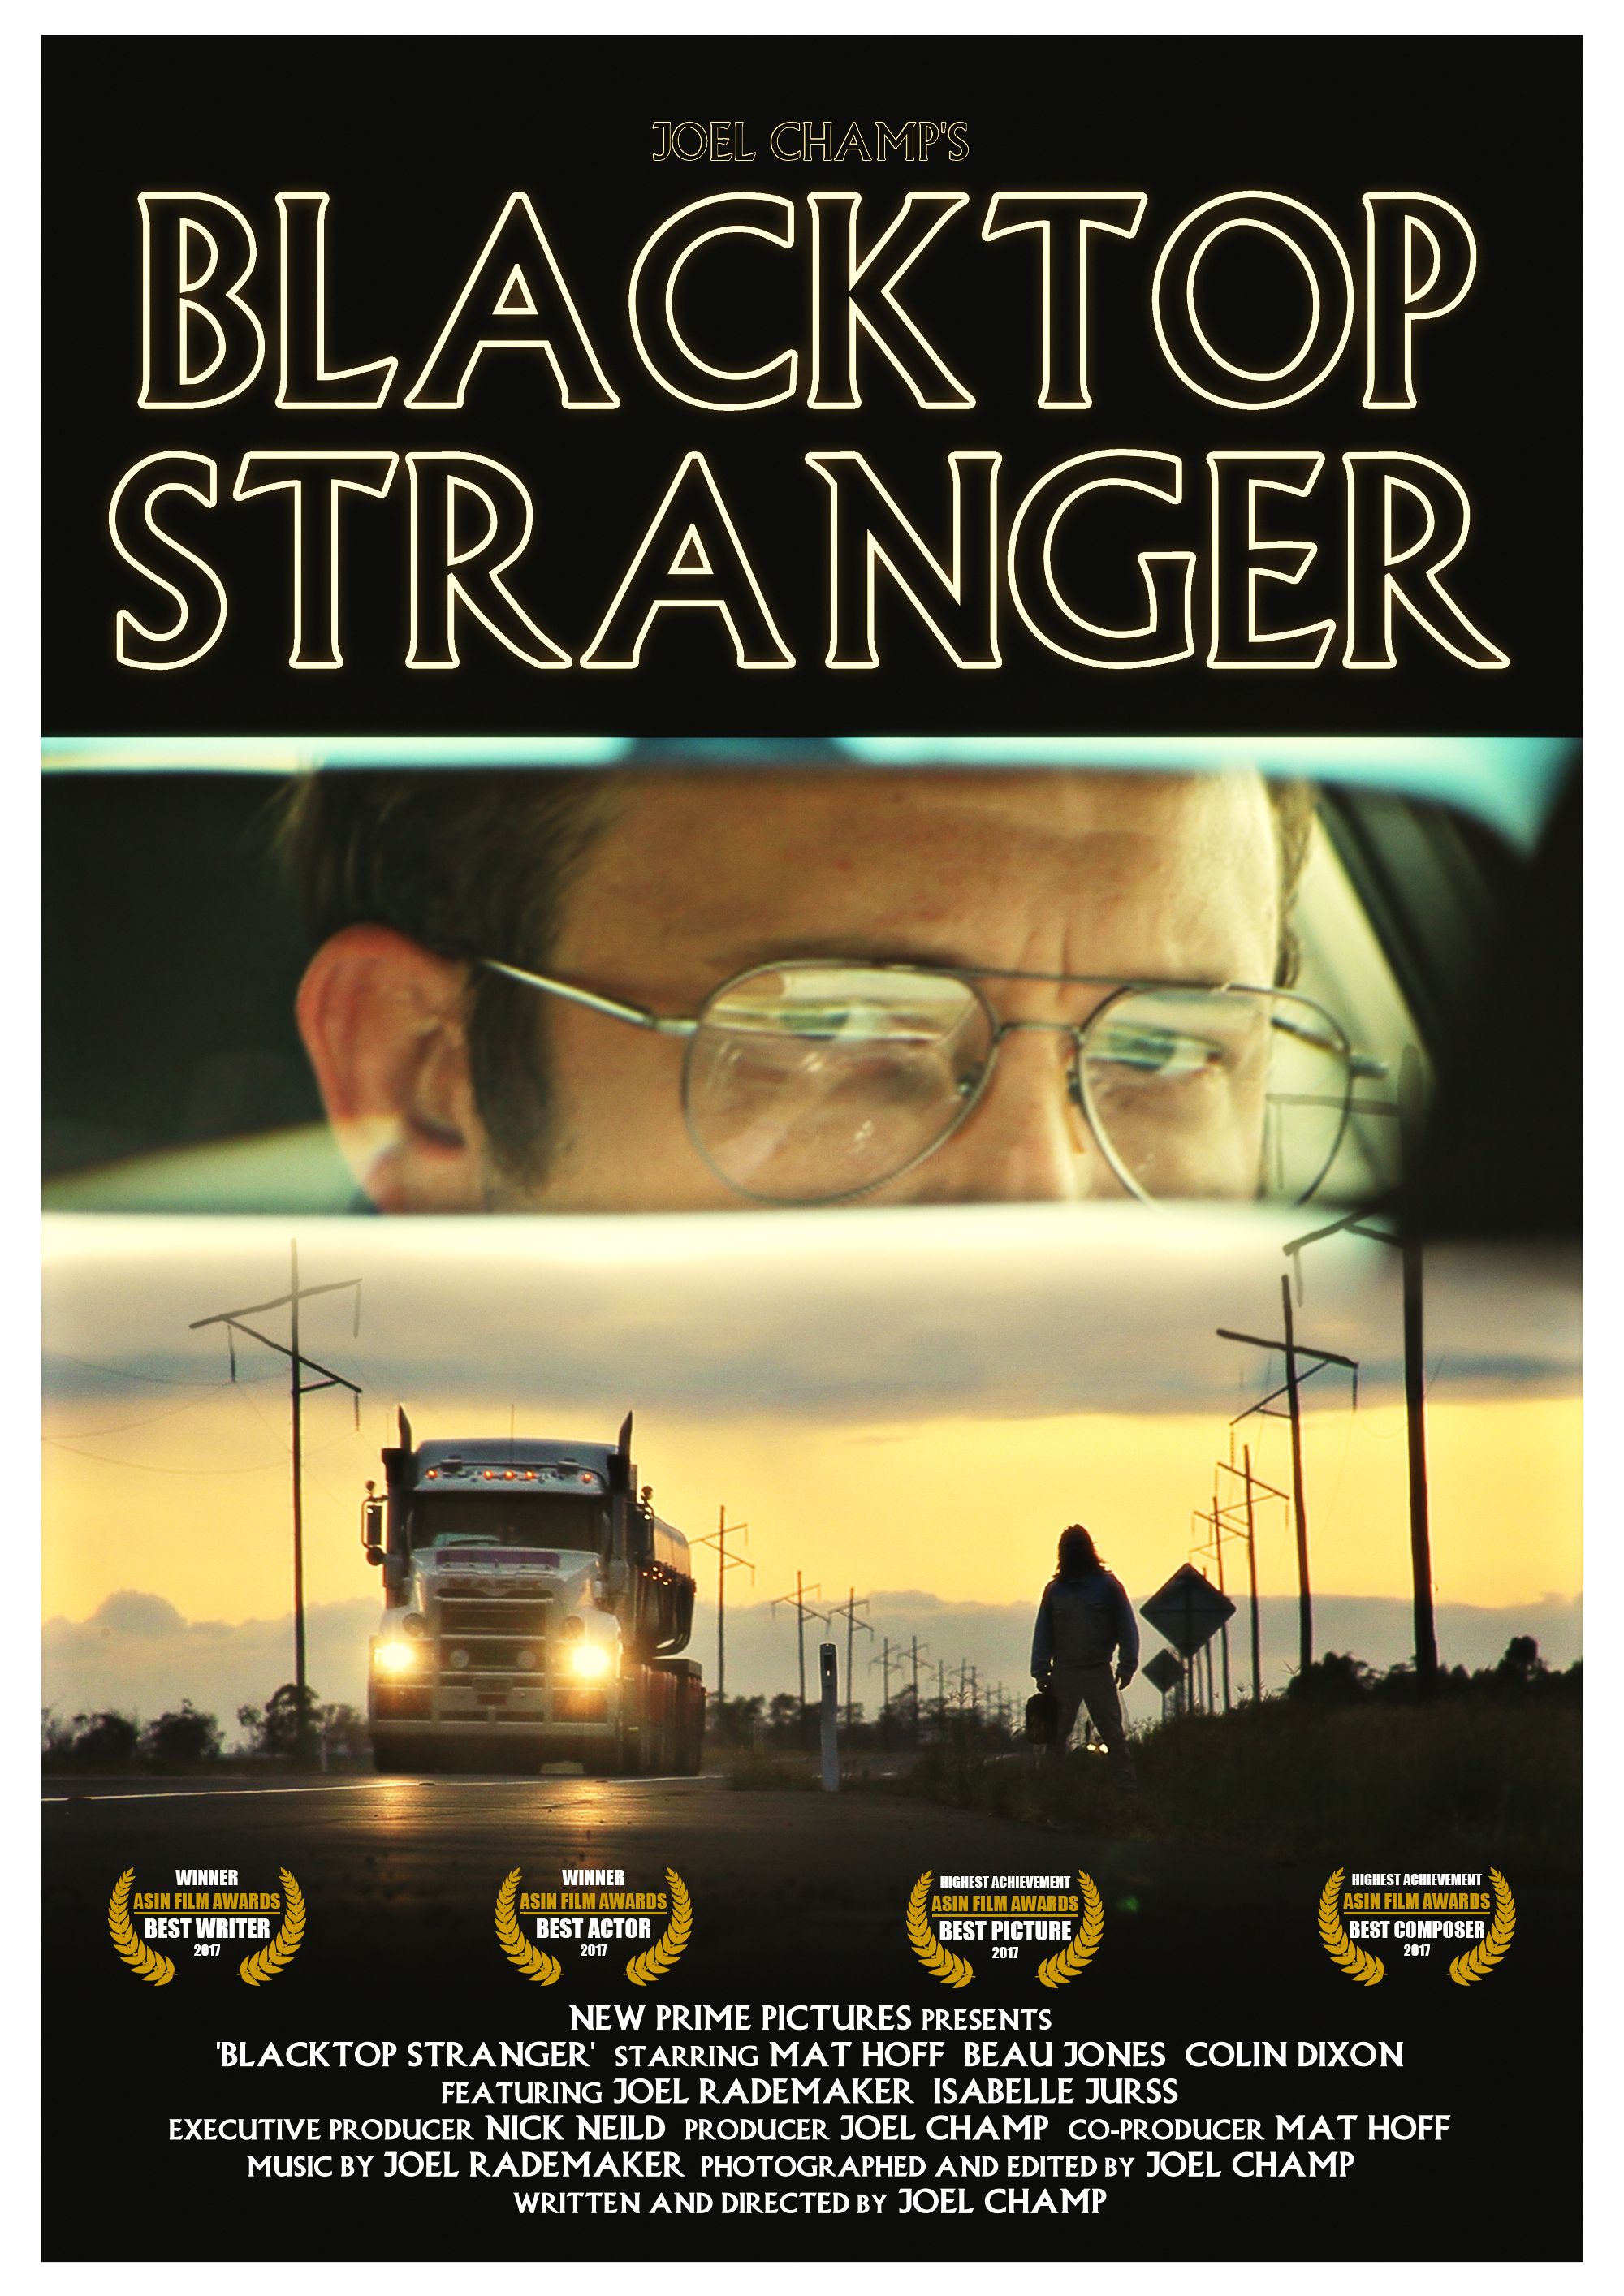 Blacktop Stranger (2017) Final Poster 2K PRINT With Awards.jpg